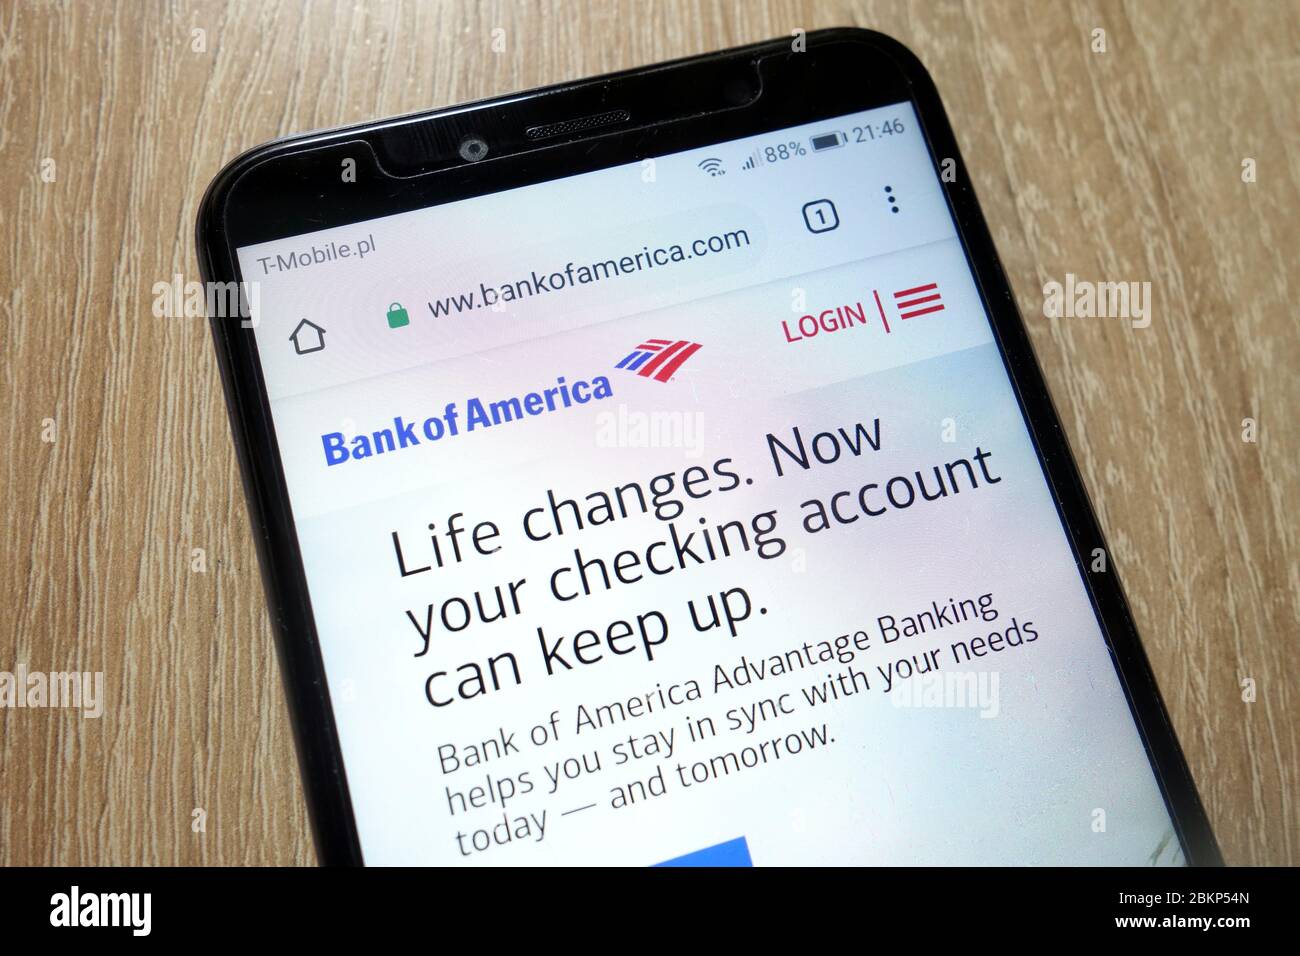 Bank of America website (www.bankofamerica.com) displayed on smartphone Stock Photo